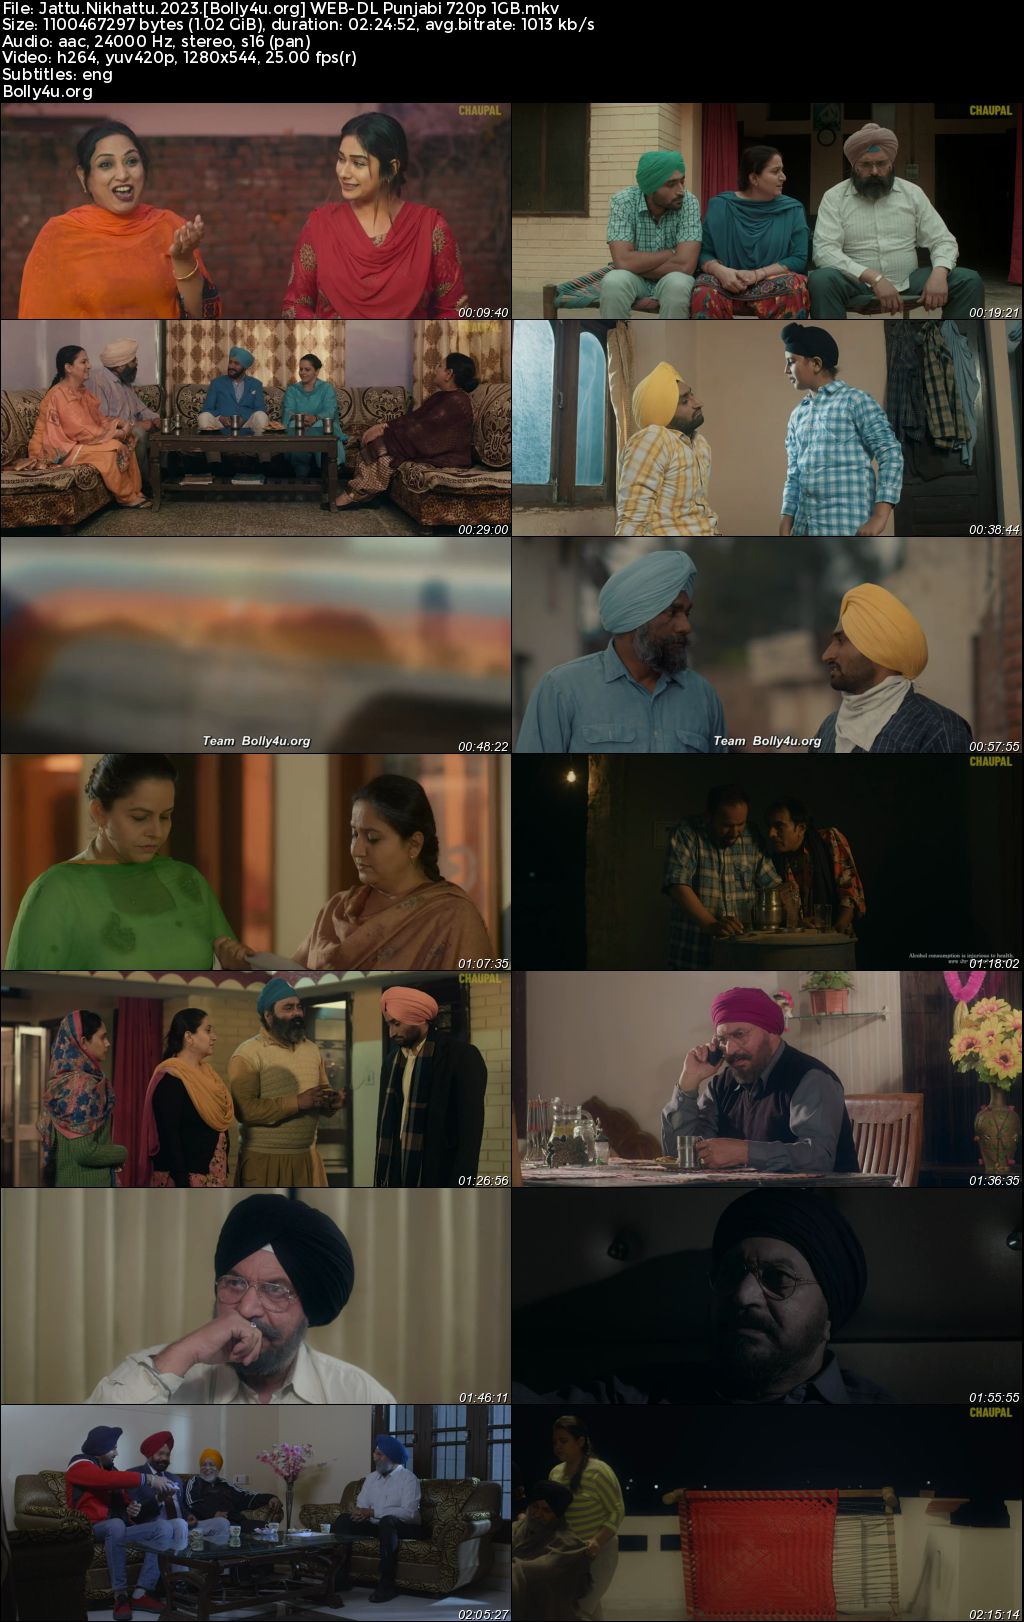 Jattu Nikhattu 2023 WEB-DL Punjabi Full Movie Download 1080p 720p 480p